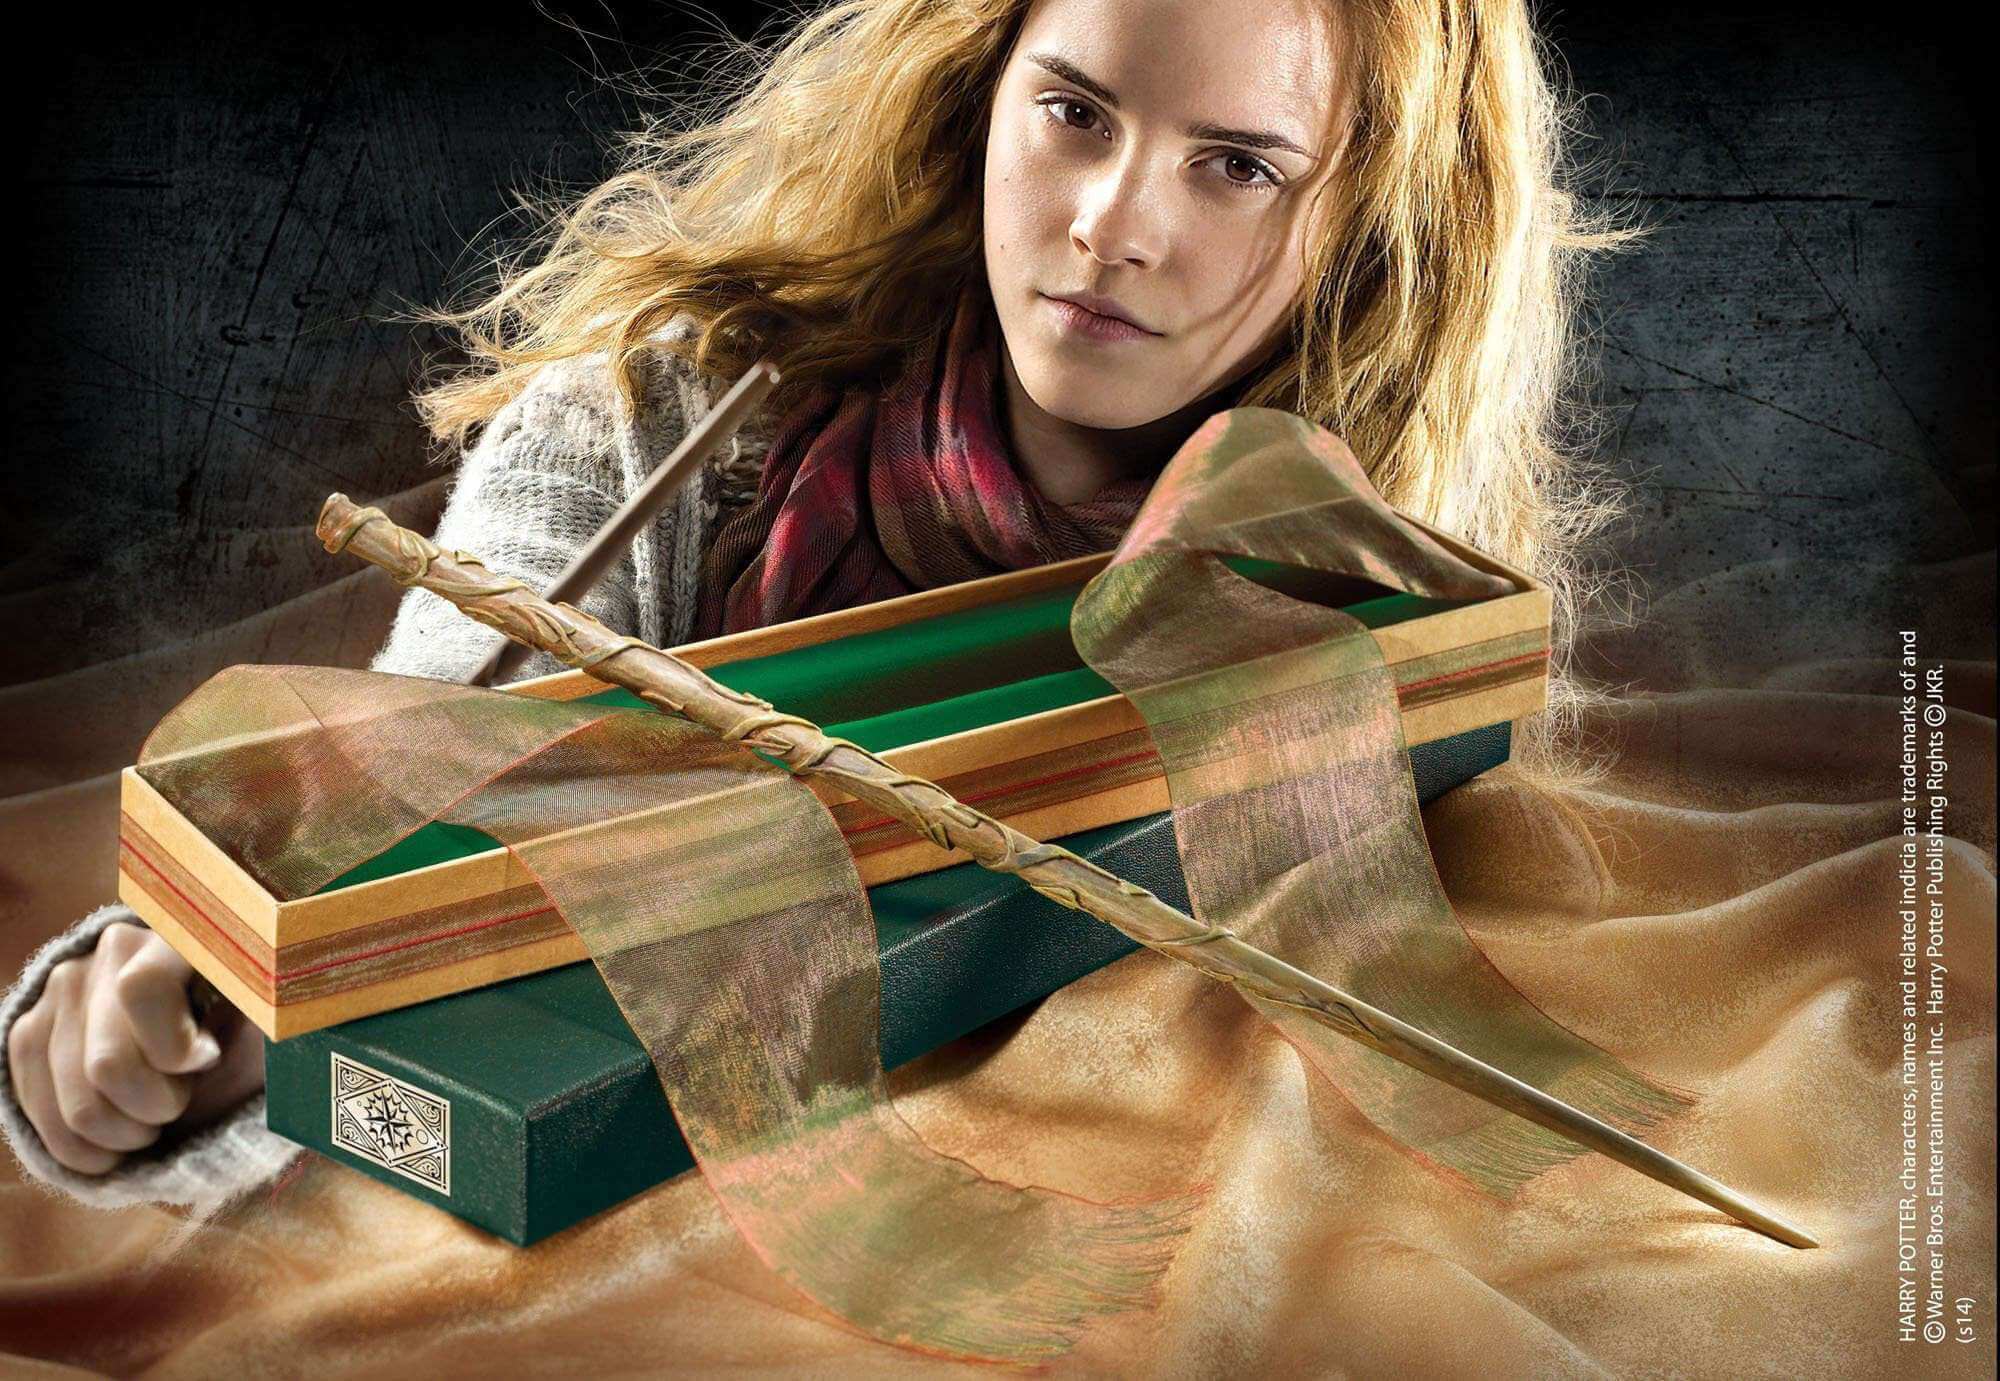 The Noble Collection Harry Potter Patronus Plush Otter - Hermione Granger